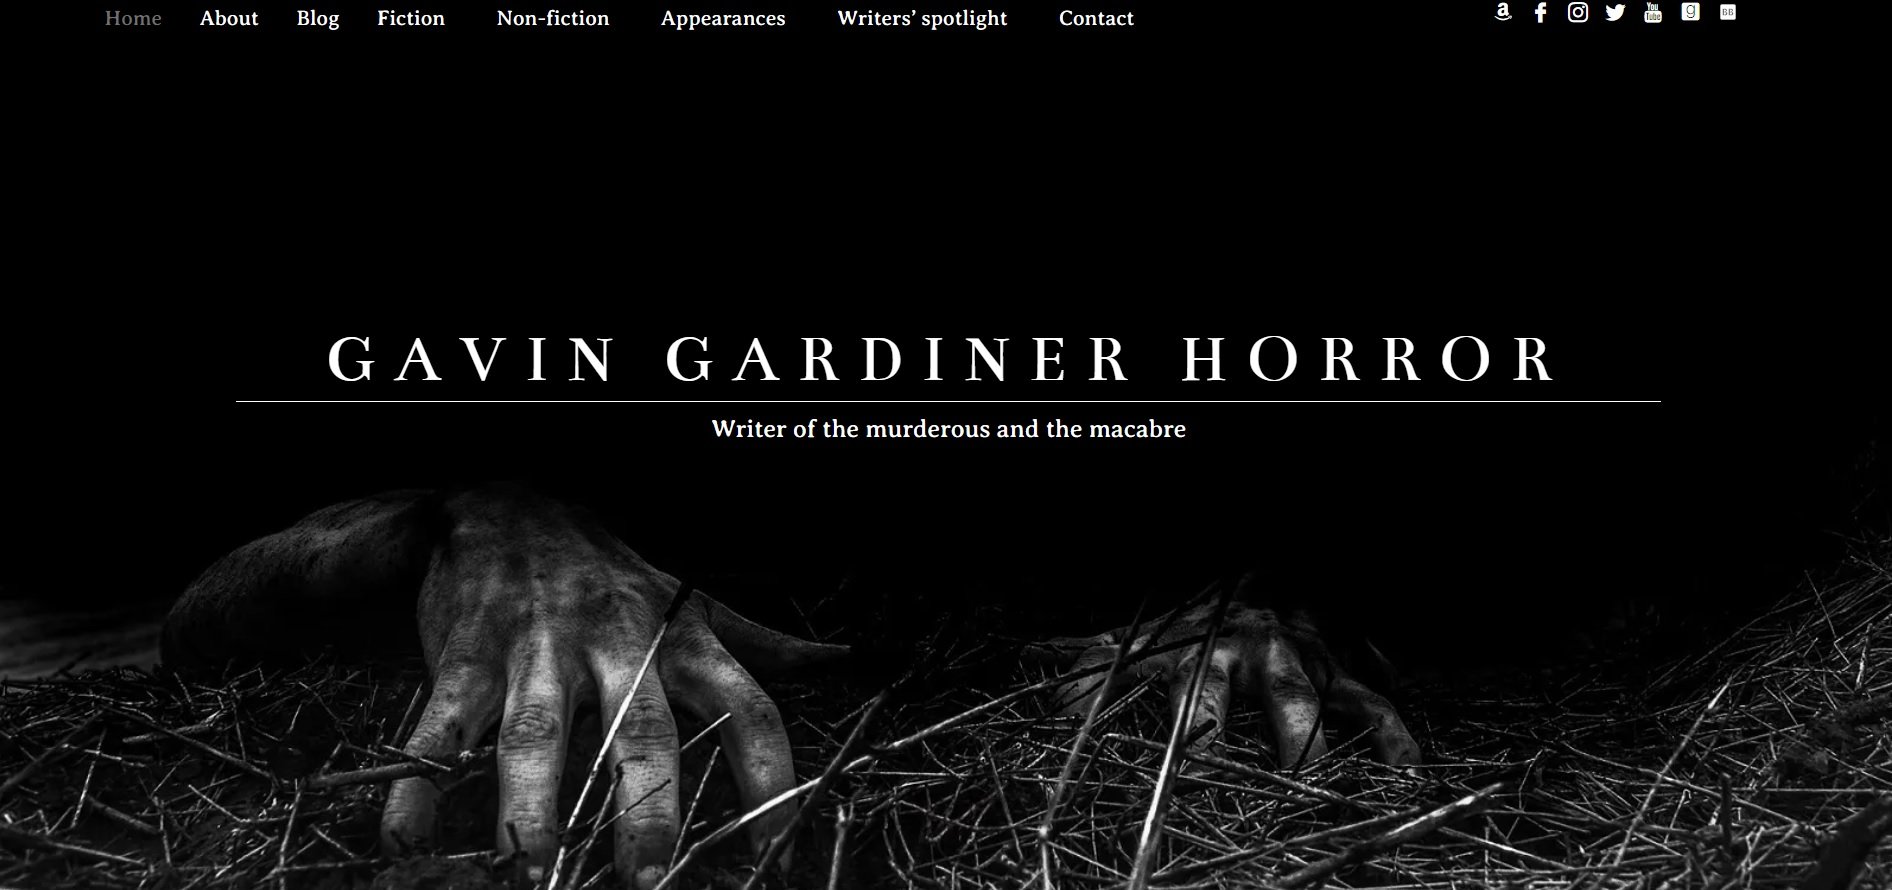 gavin-gardiner-horror-old-website.jpg